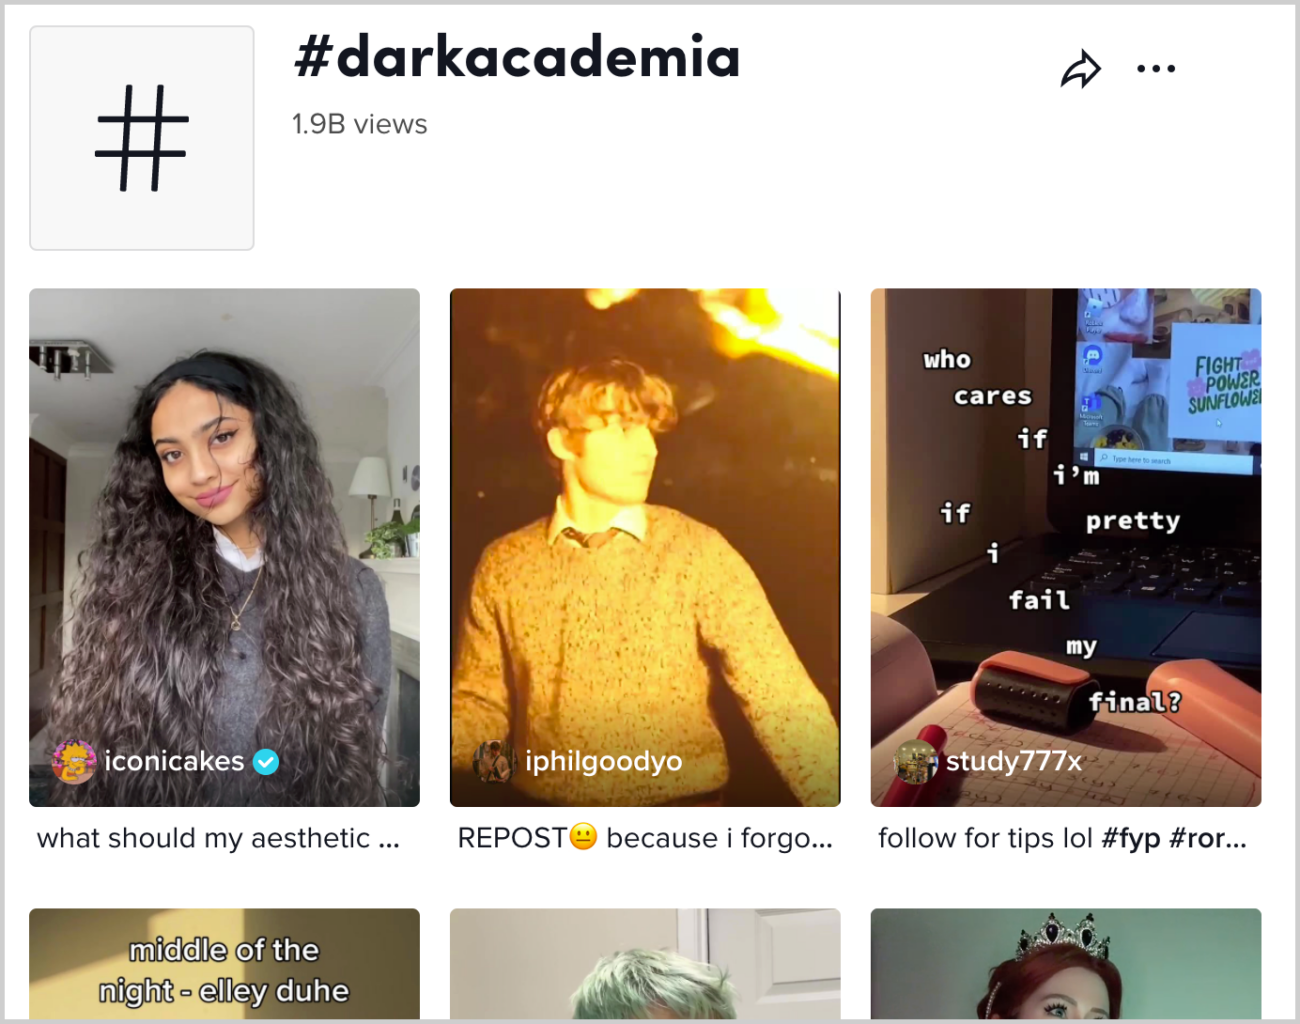 dark academia